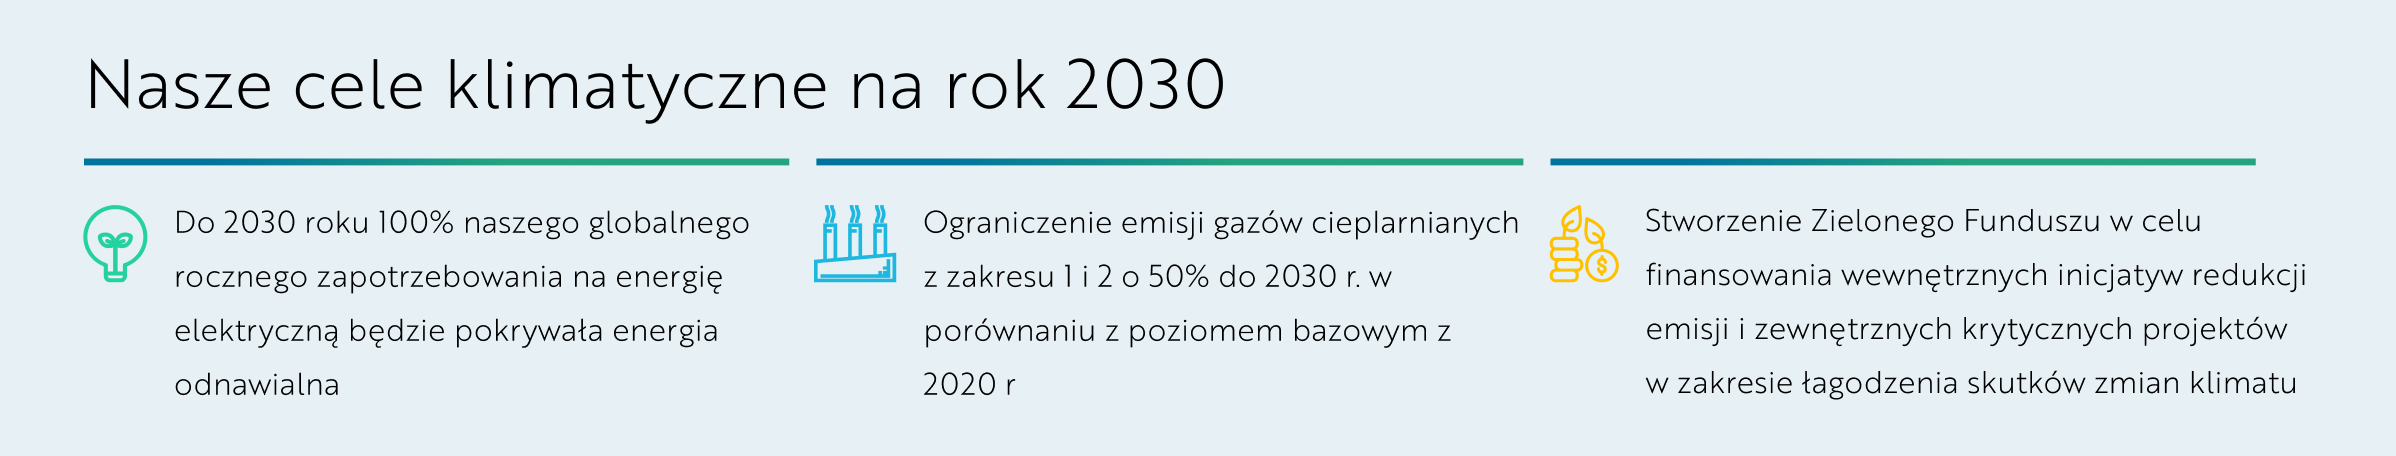 PL Translation Our 2030 Climate Goals Graphics